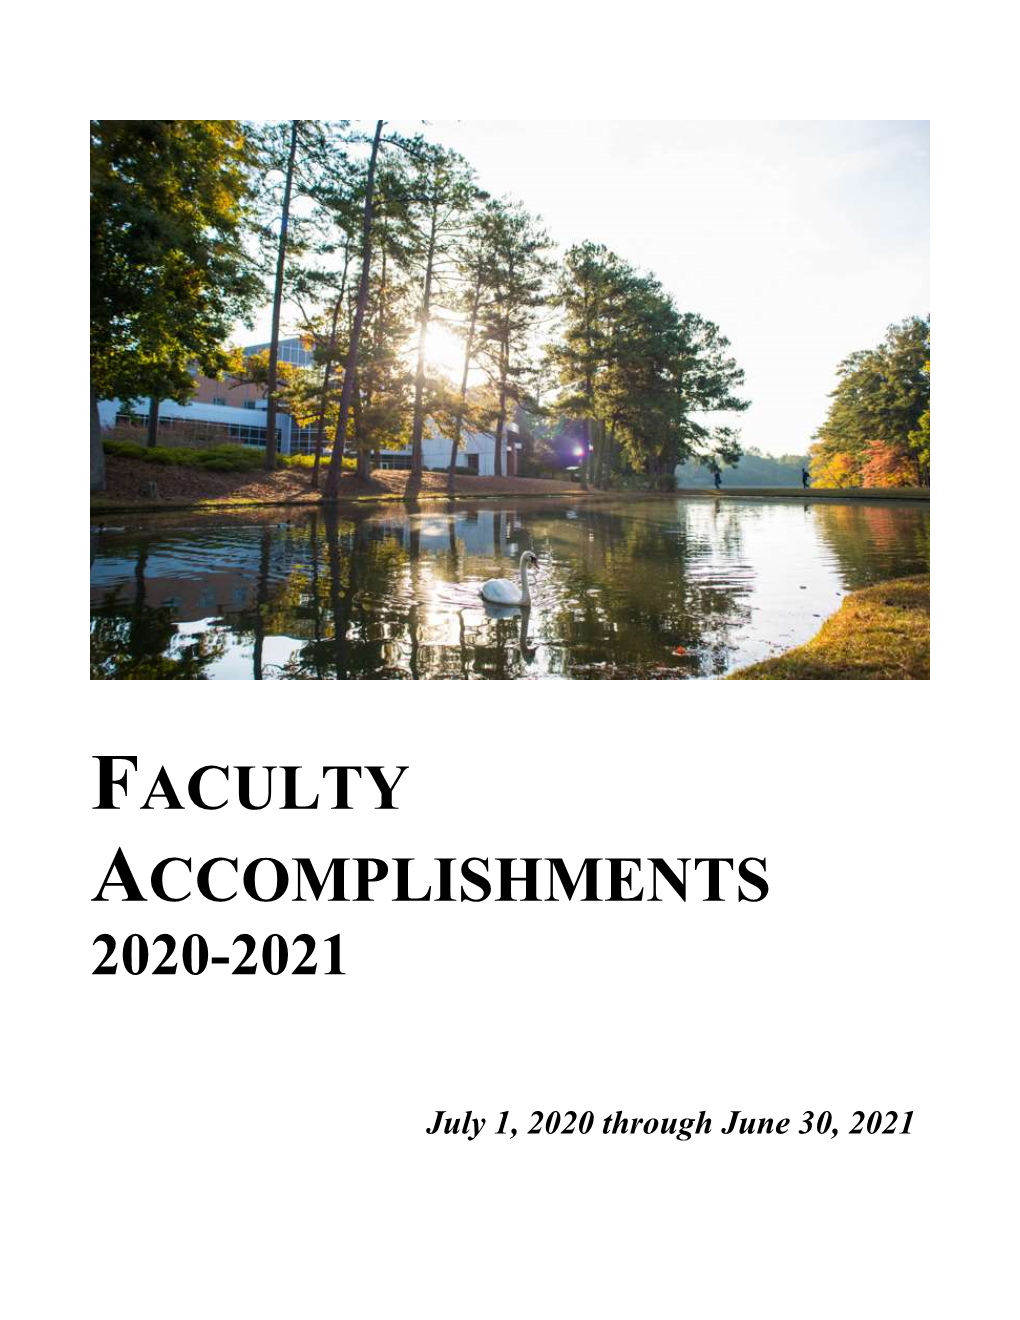 Faculty Accomplishments 2020-2021